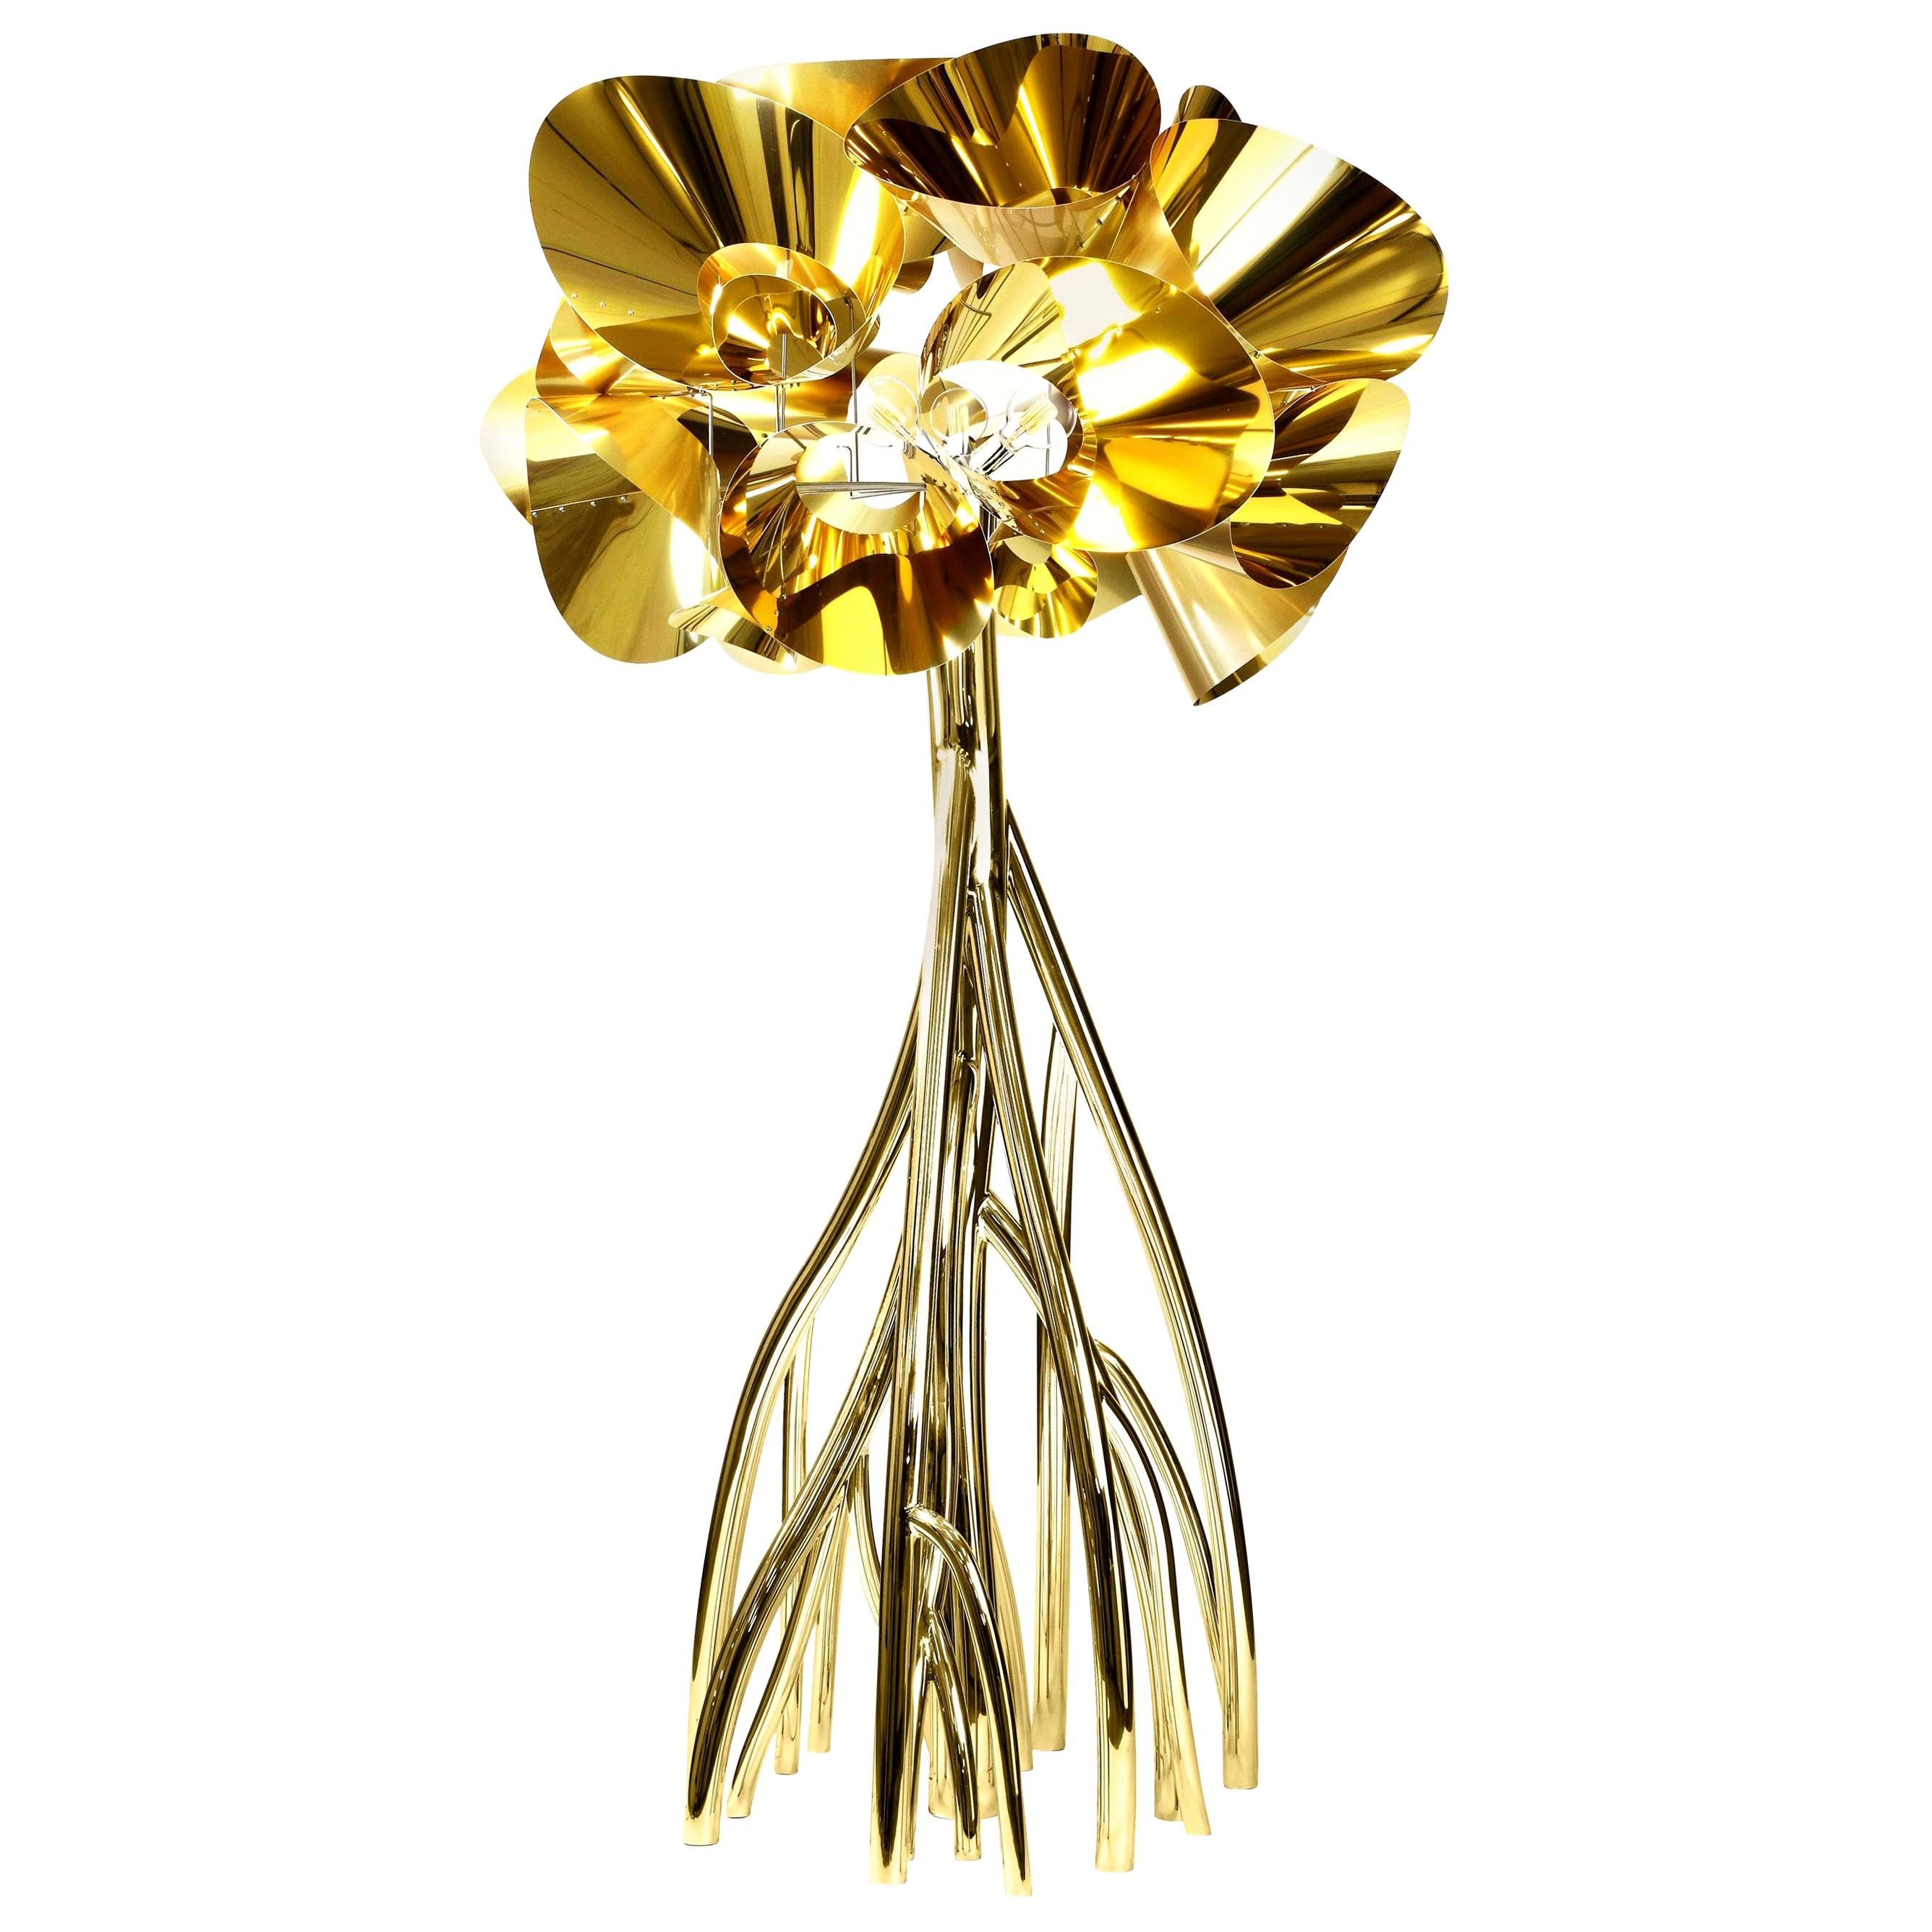 Floor Lamp Decorative Big Sculpture Golden Mirror Steel Gold Lampshade Italy For Sale